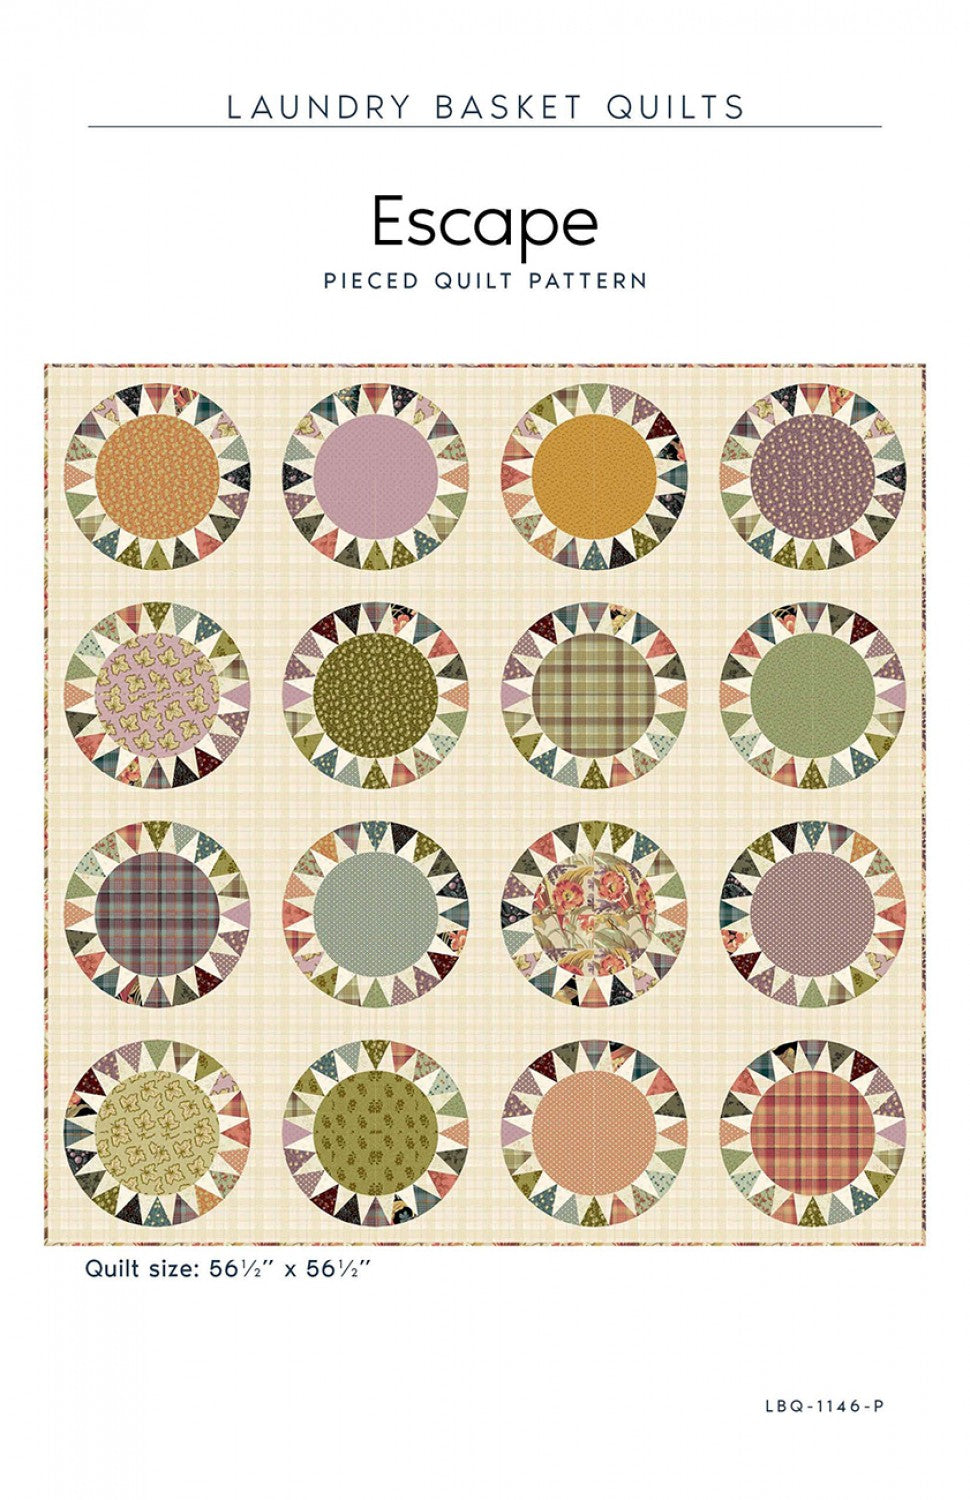 Escape Quilt Pattern by Laundry Basket